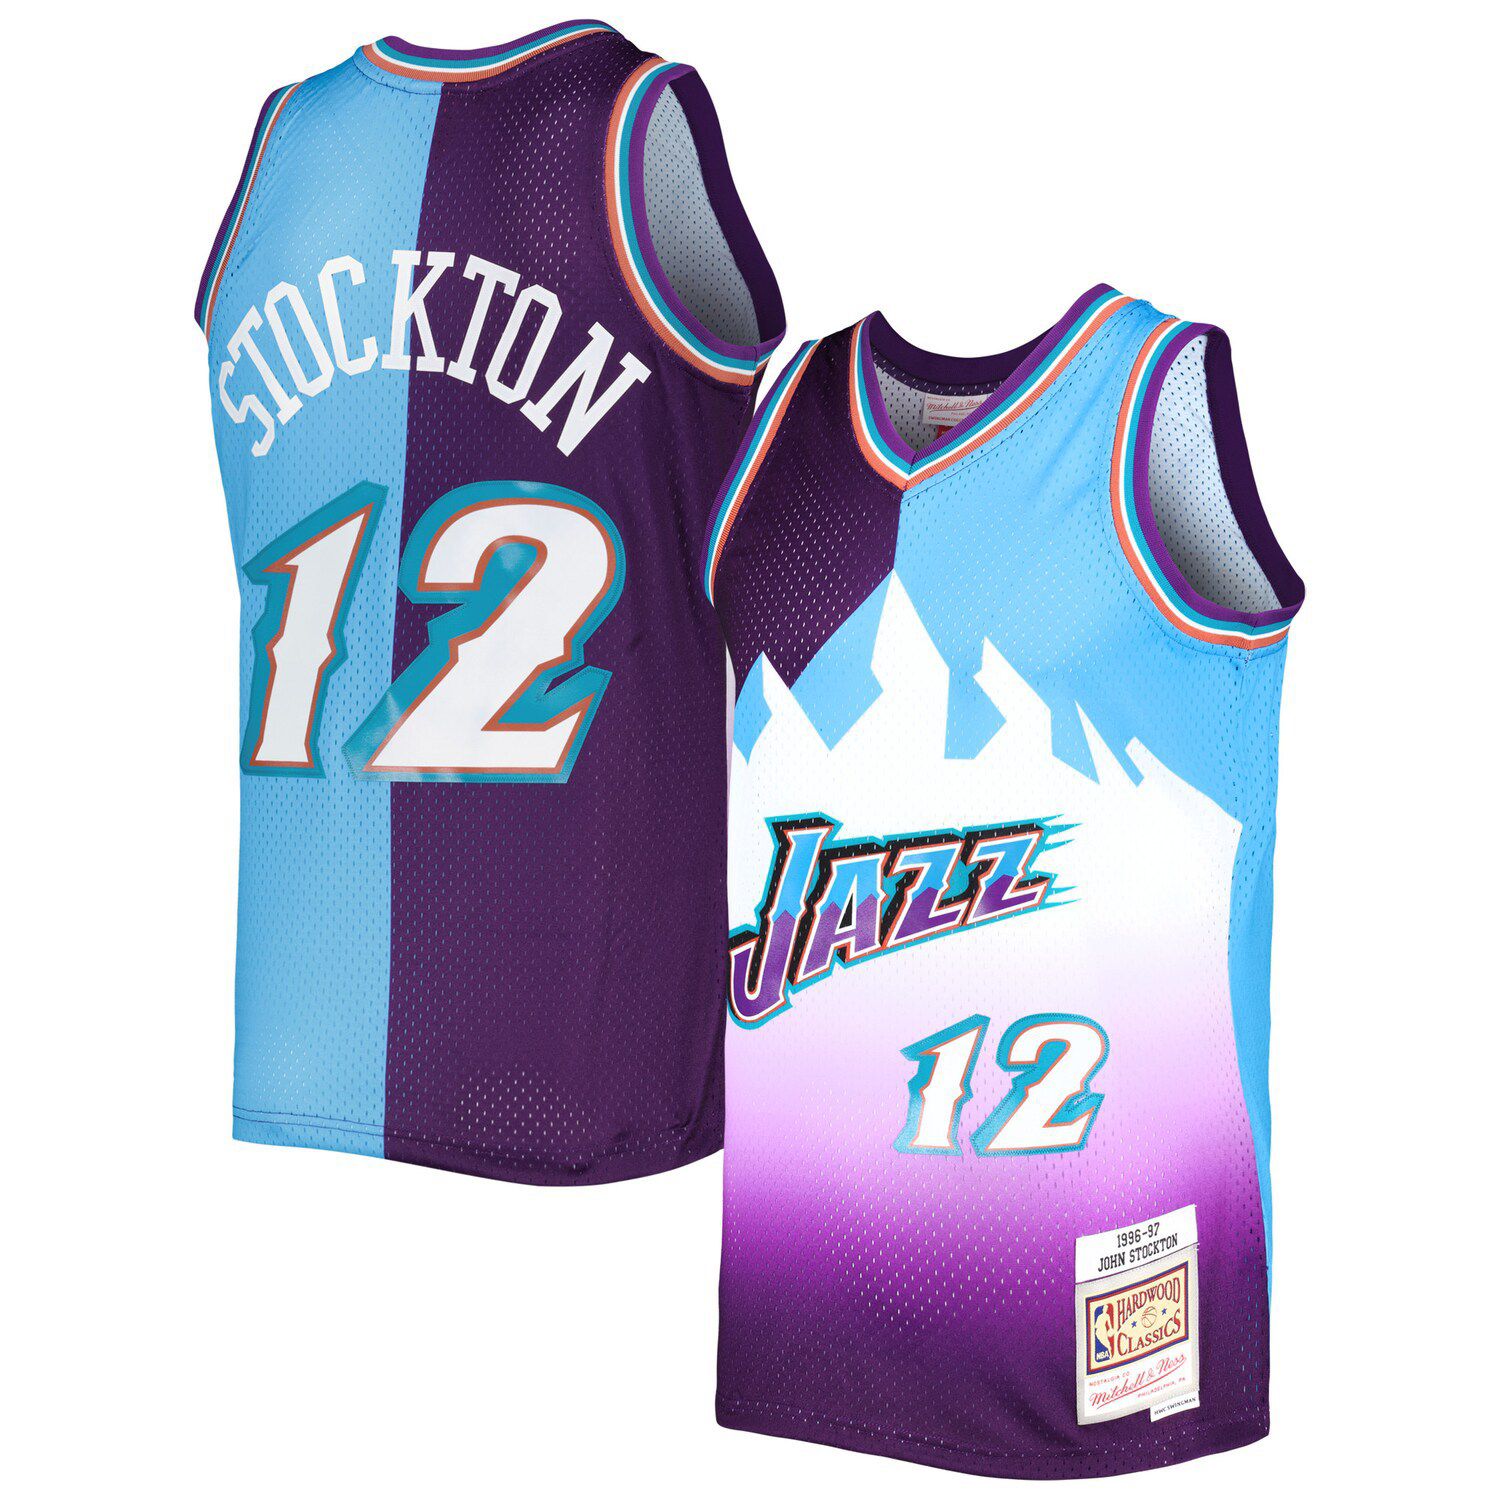 Youth Nike Collin Sexton Purple Utah Jazz 2022/23 Swingman Jersey - City Edition